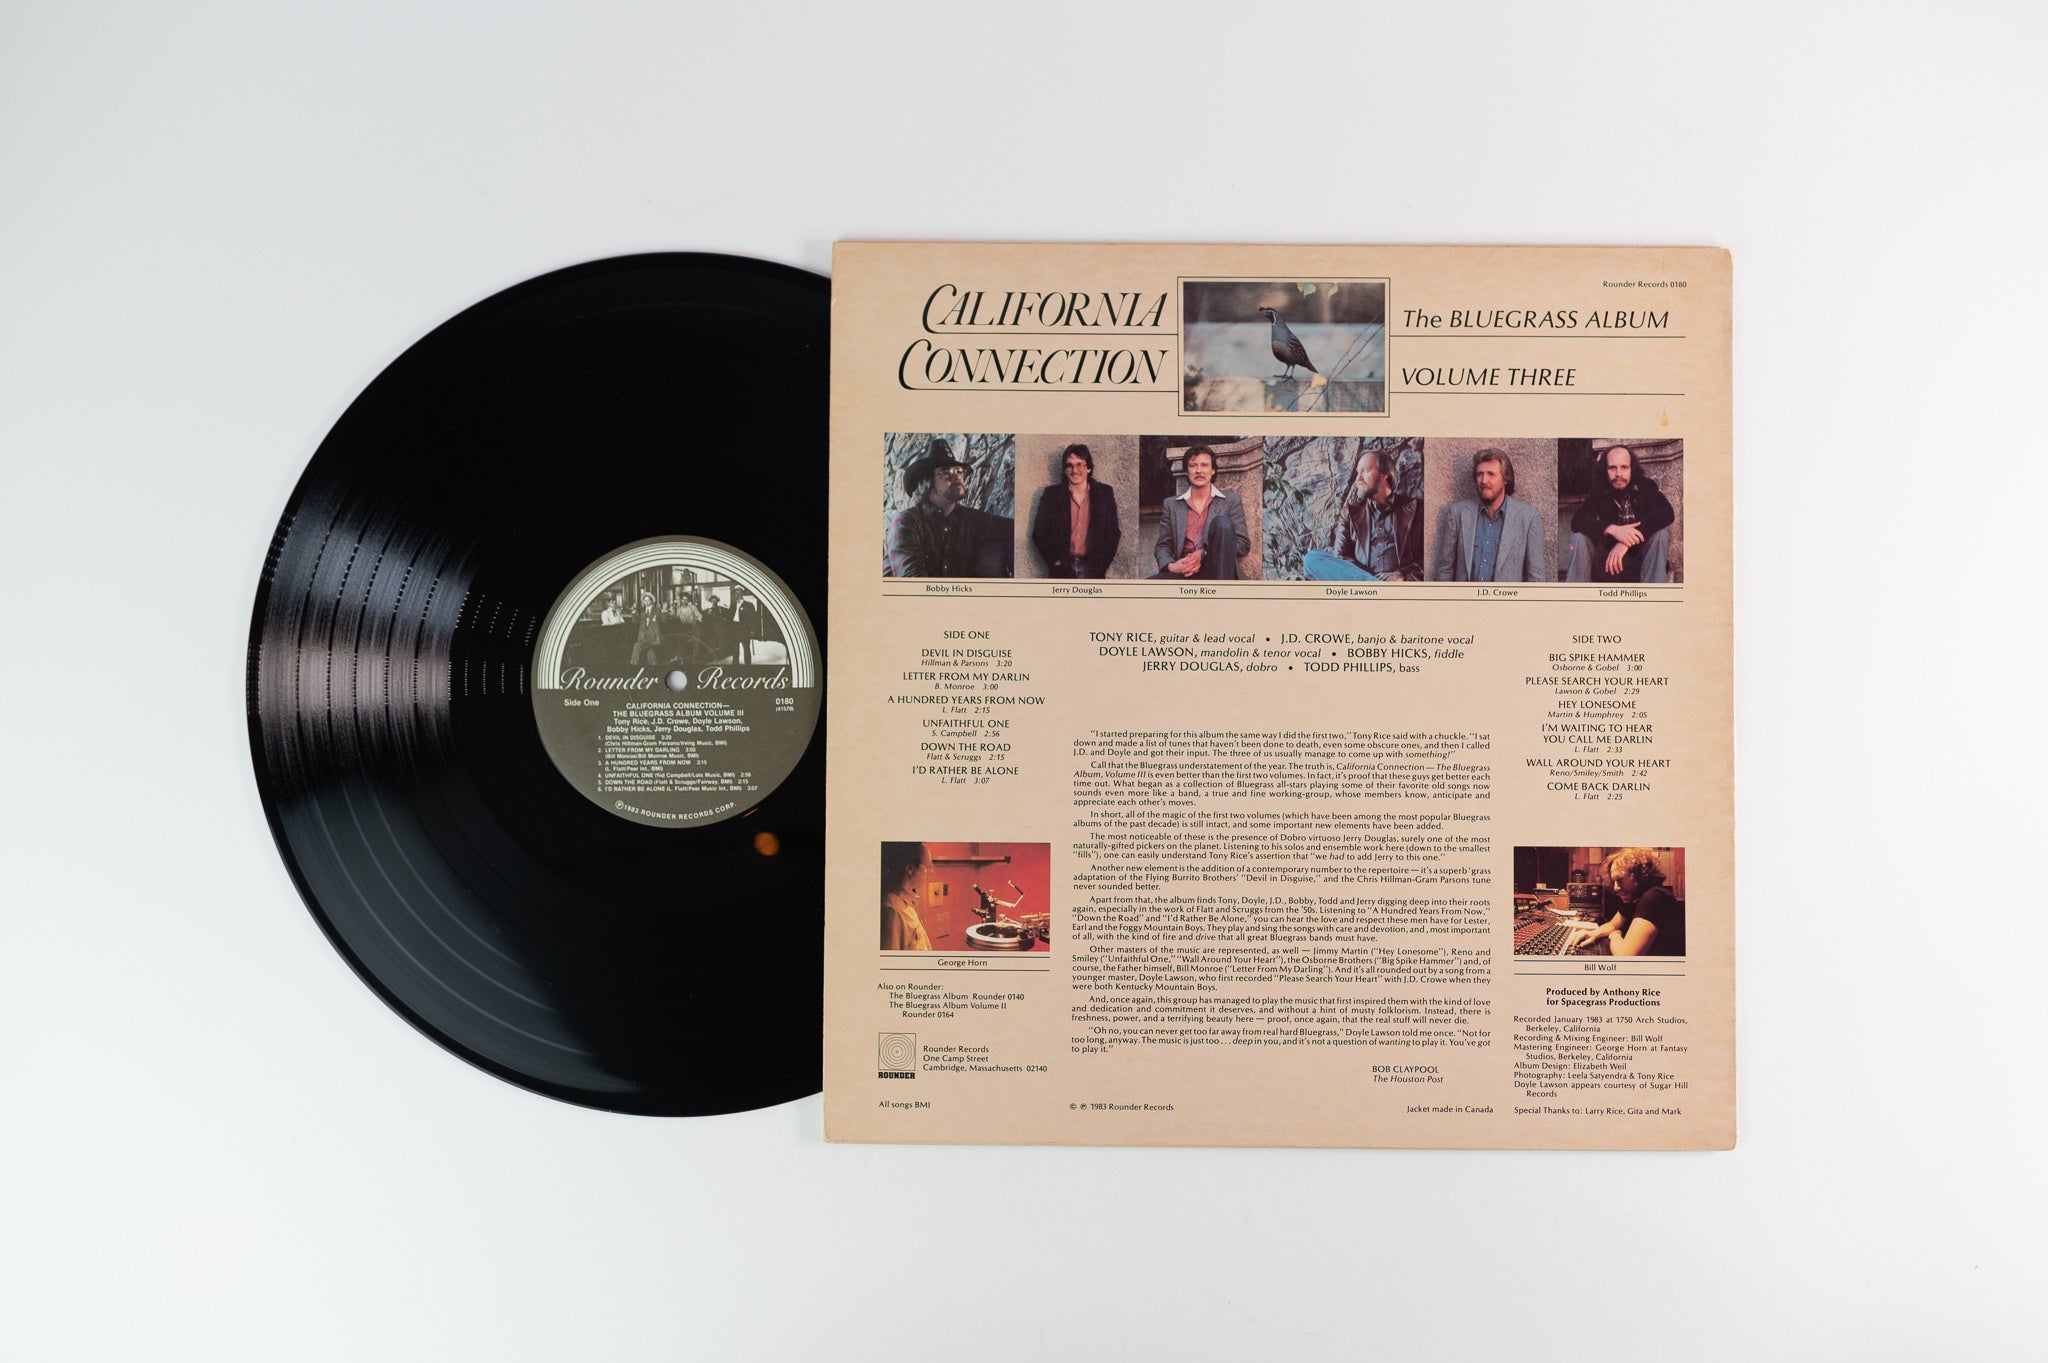 Bluegrass Album Band - California Connection - The Bluegrass Album Vol. Three on Rounder